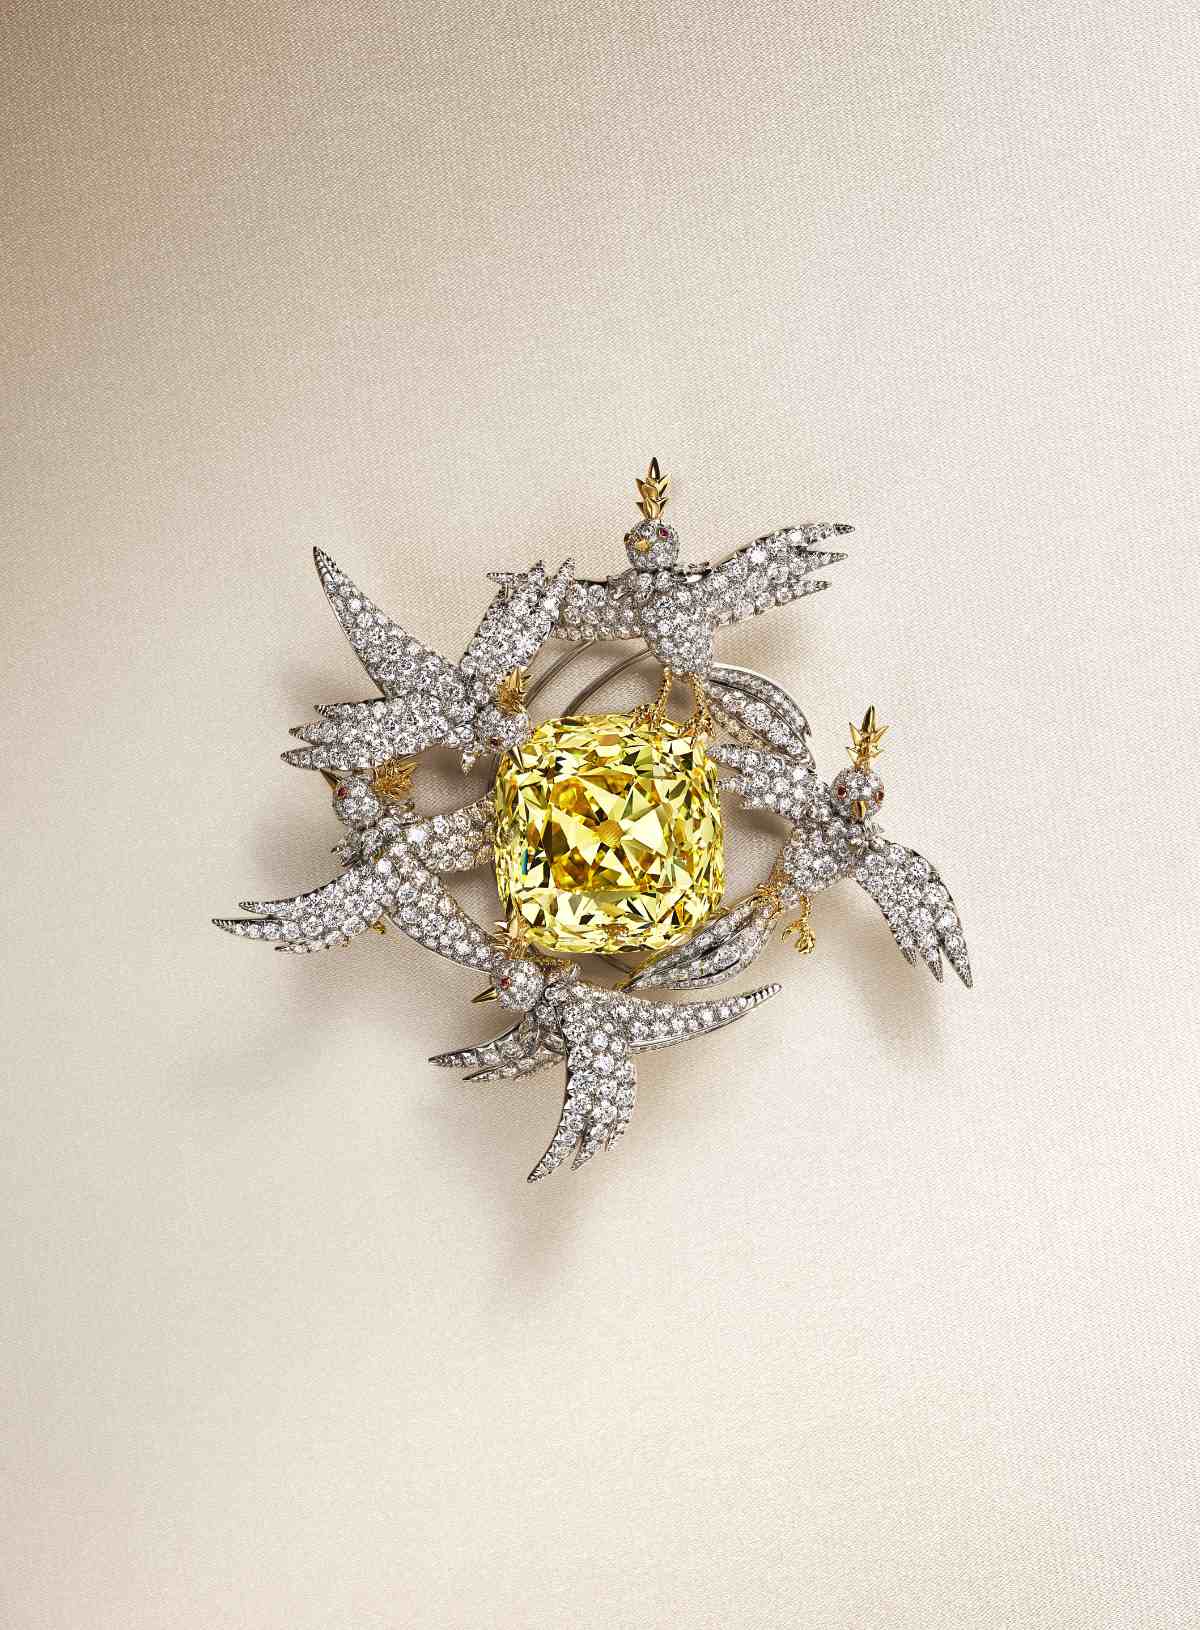 Tiffany & Co. Unveils A New Design For The Tiffany Diamond